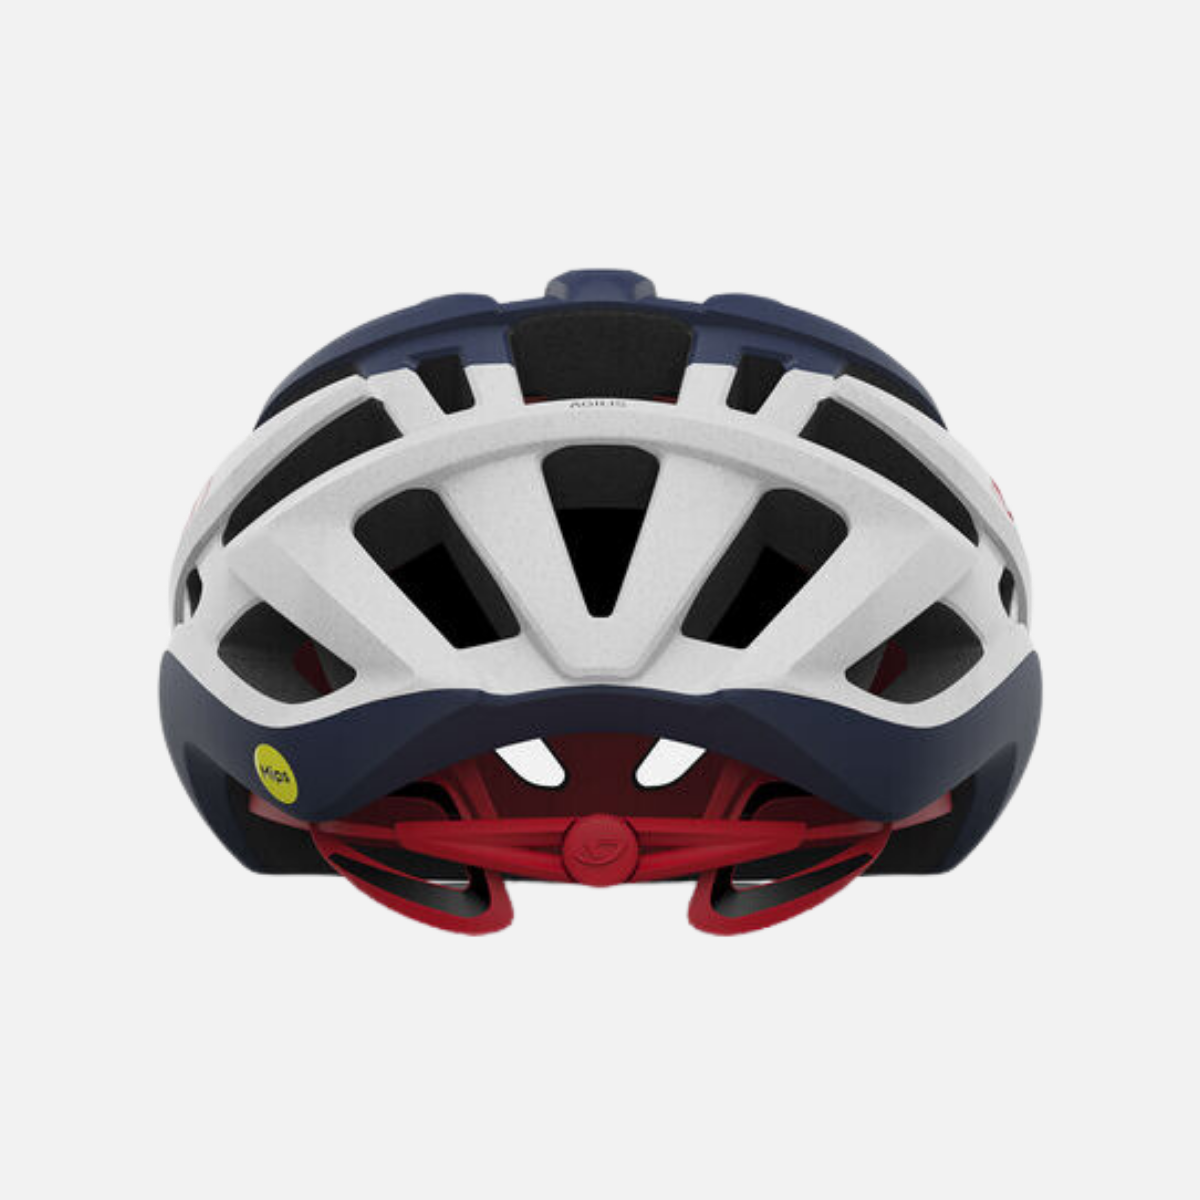 Giro Agilis MIPS Cycling Helmet (S,M,L) - Matte Midnight/White/Bright Red